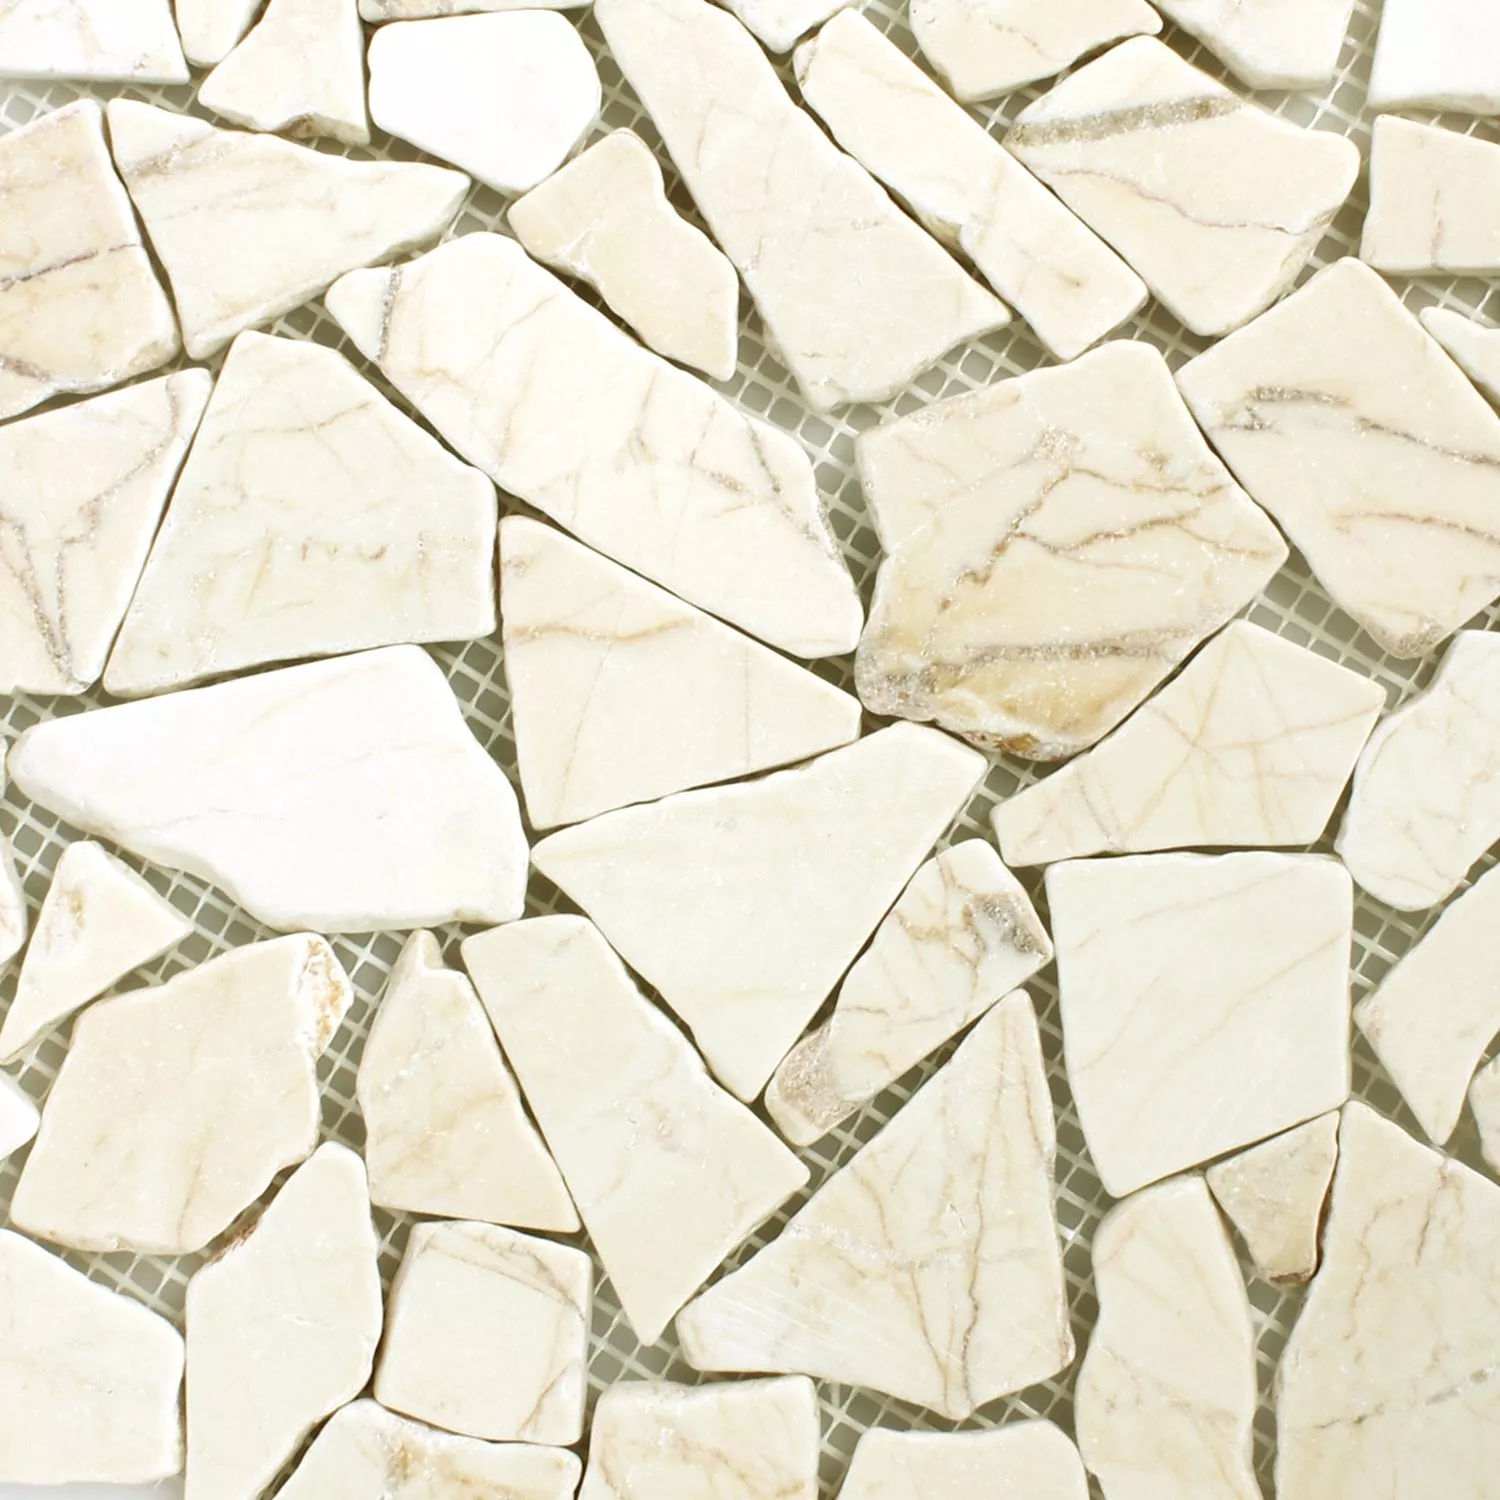 Sample Mosaic Tiles Broken Marble Golden Cream Polished